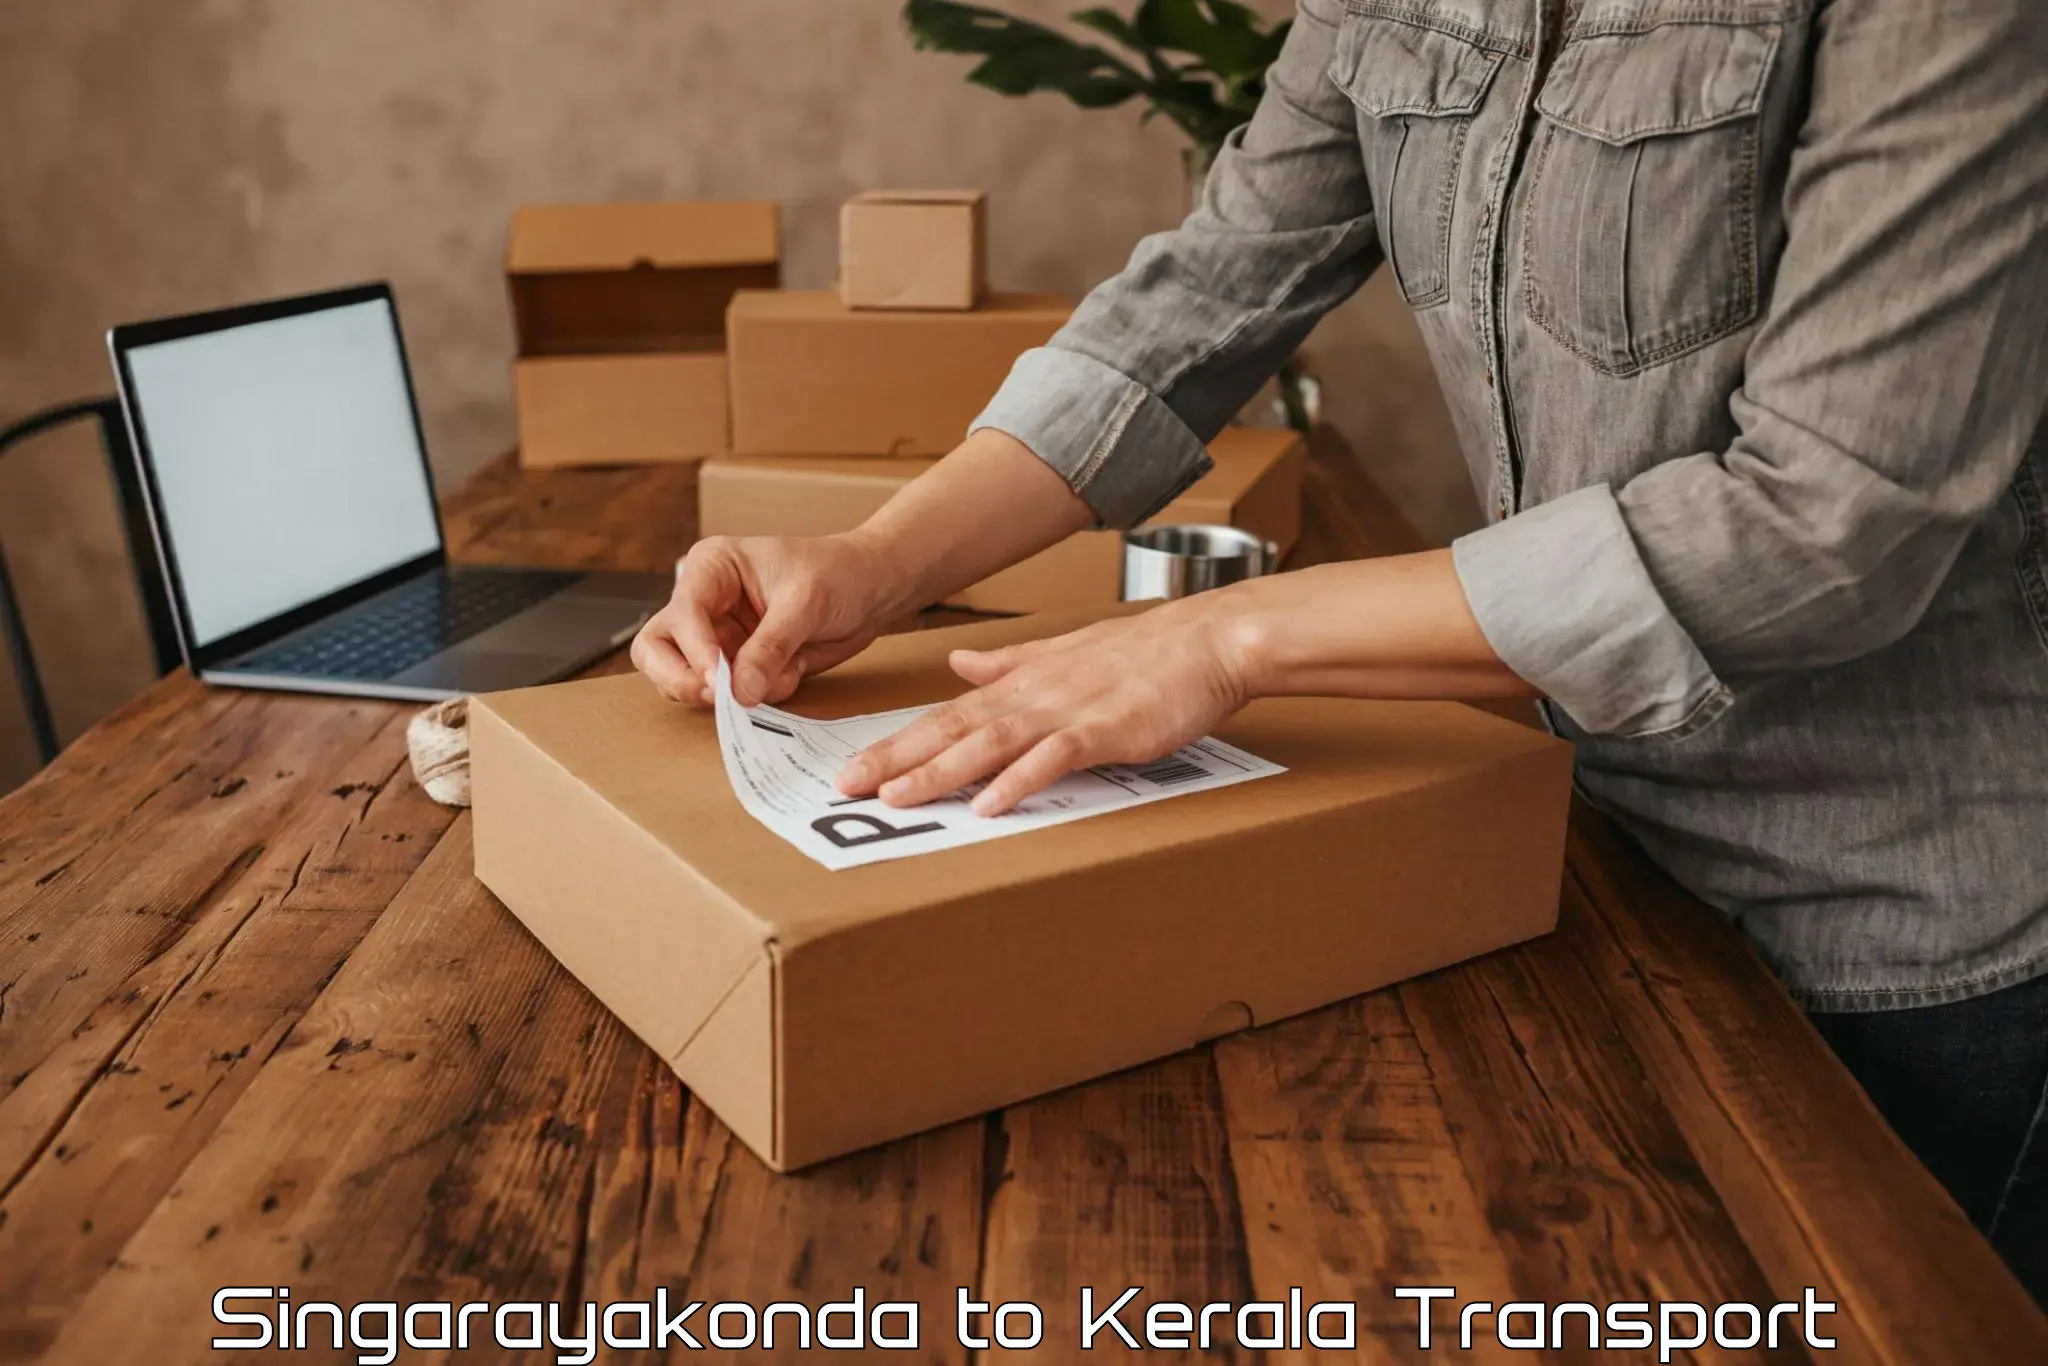 Interstate transport services Singarayakonda to Kerala